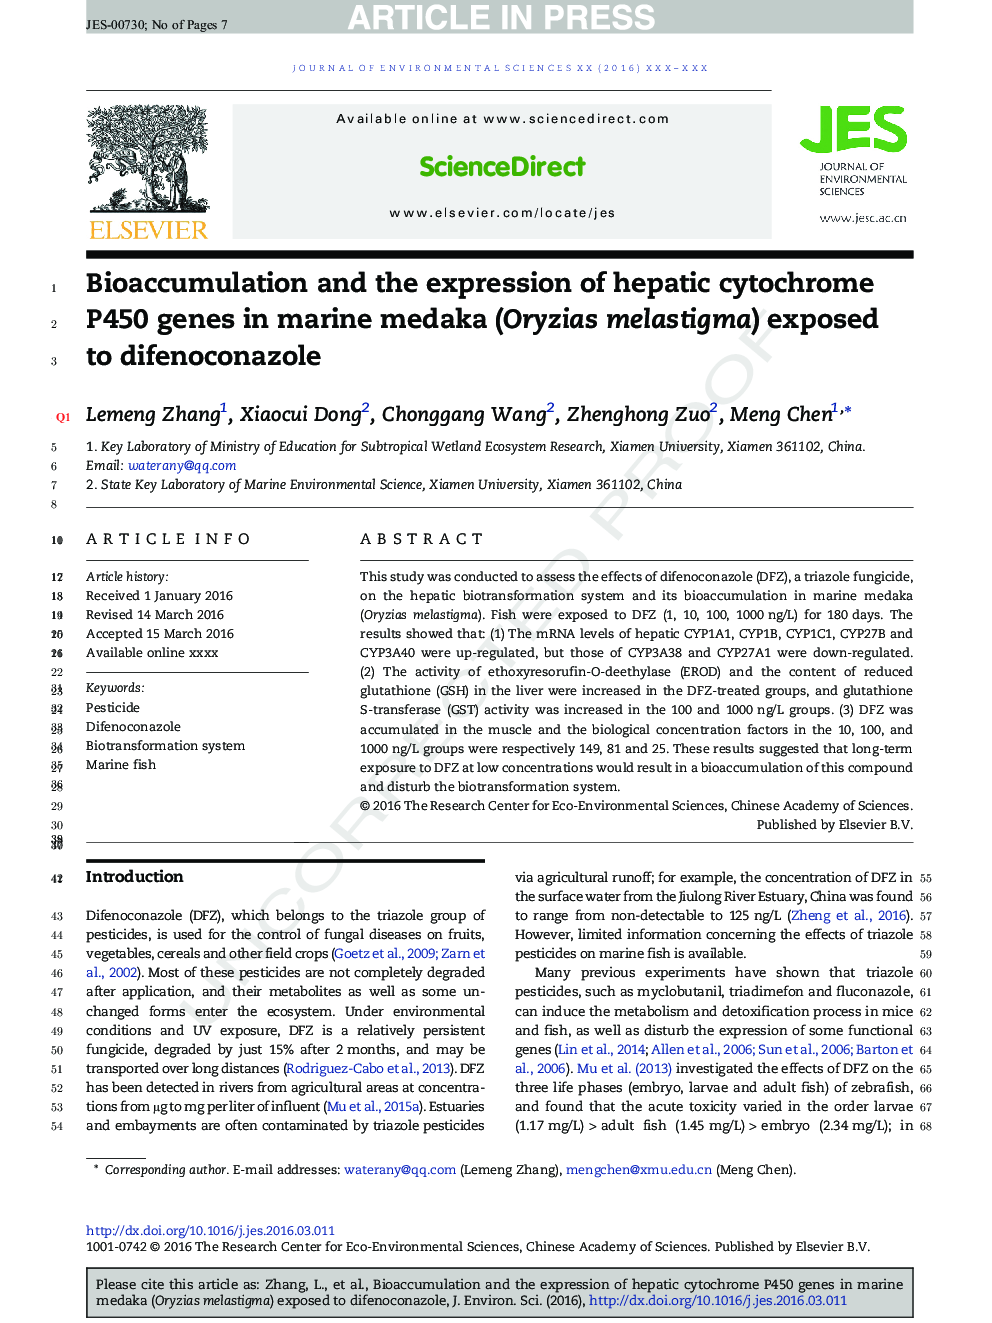 Bioaccumulation and the expression of hepatic cytochrome P450 genes in marine medaka (Oryzias melastigma) exposed to difenoconazole